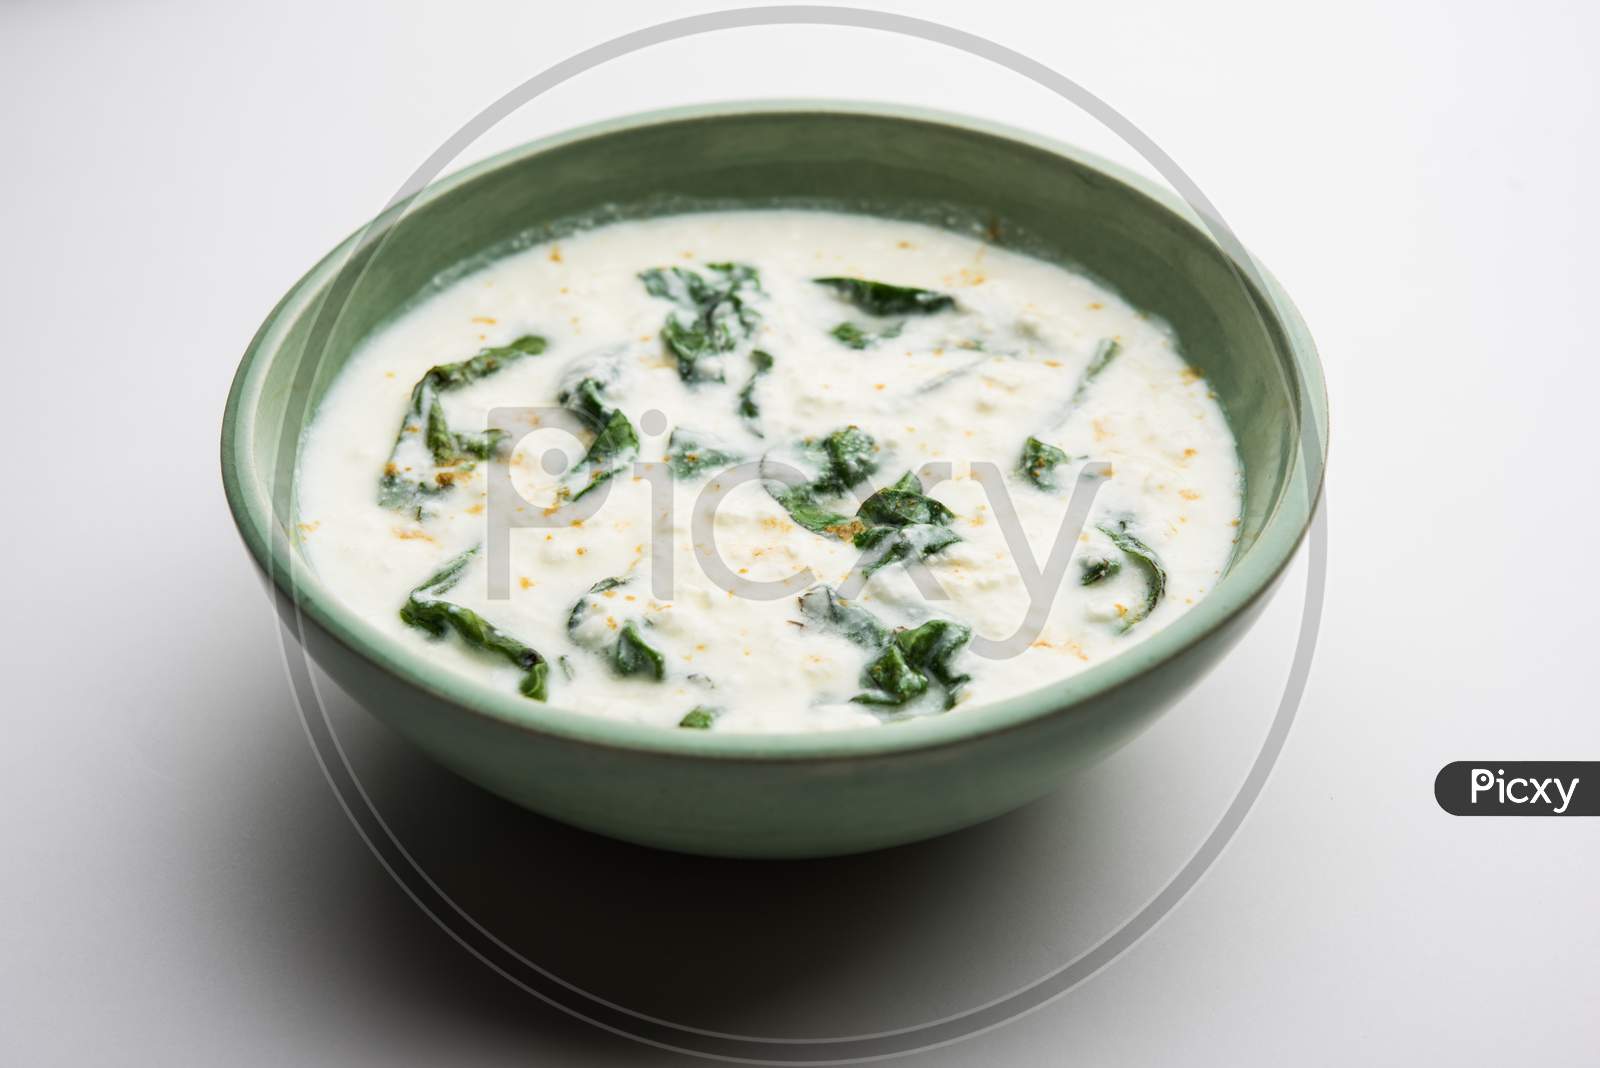 Spinach Yogurt Salad Or Palak Raita Served In A Bowl